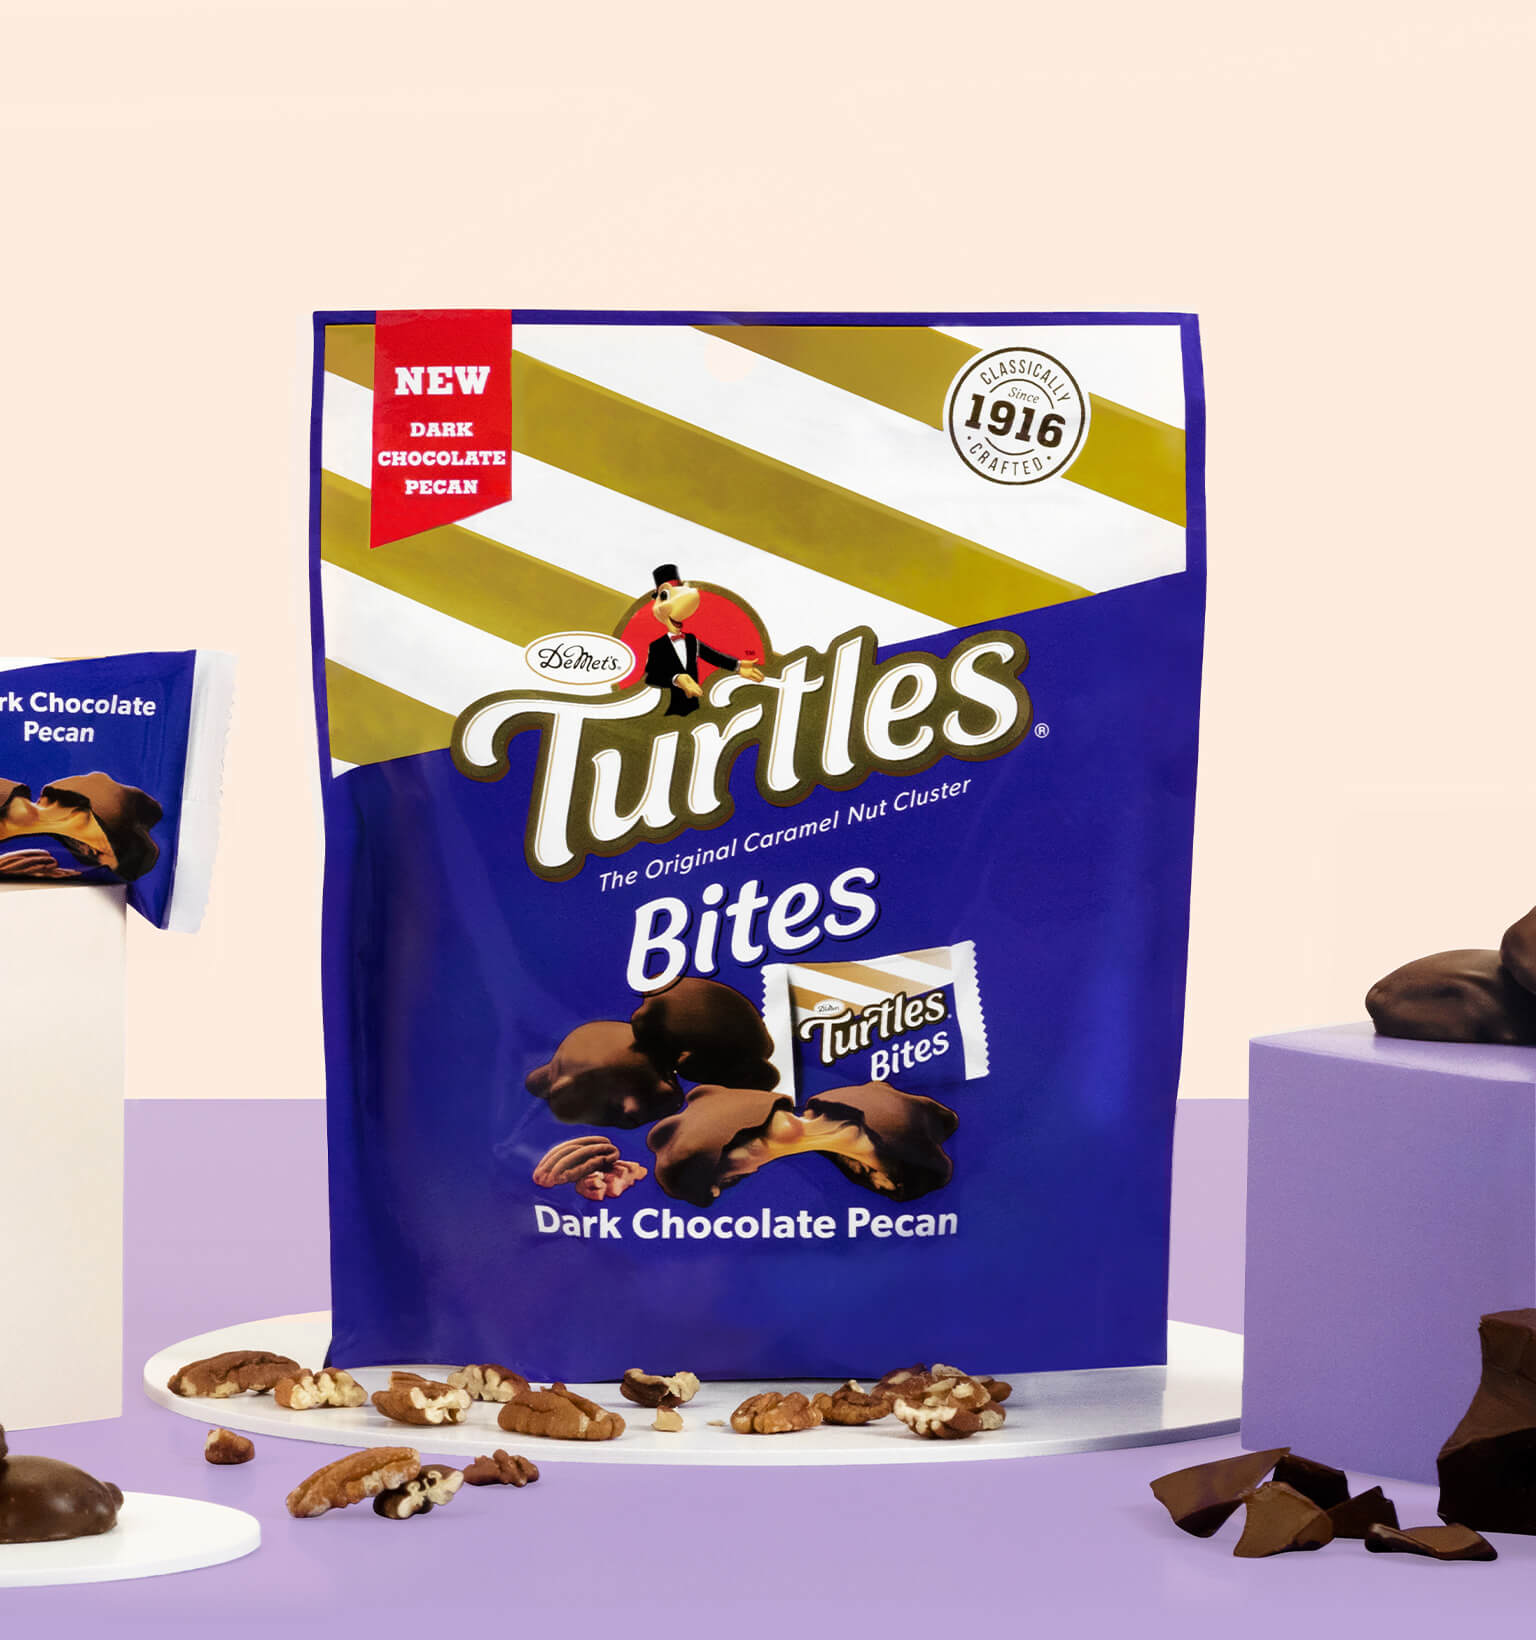 Demet's turtles dark chocolate bites with chocolate and pecans